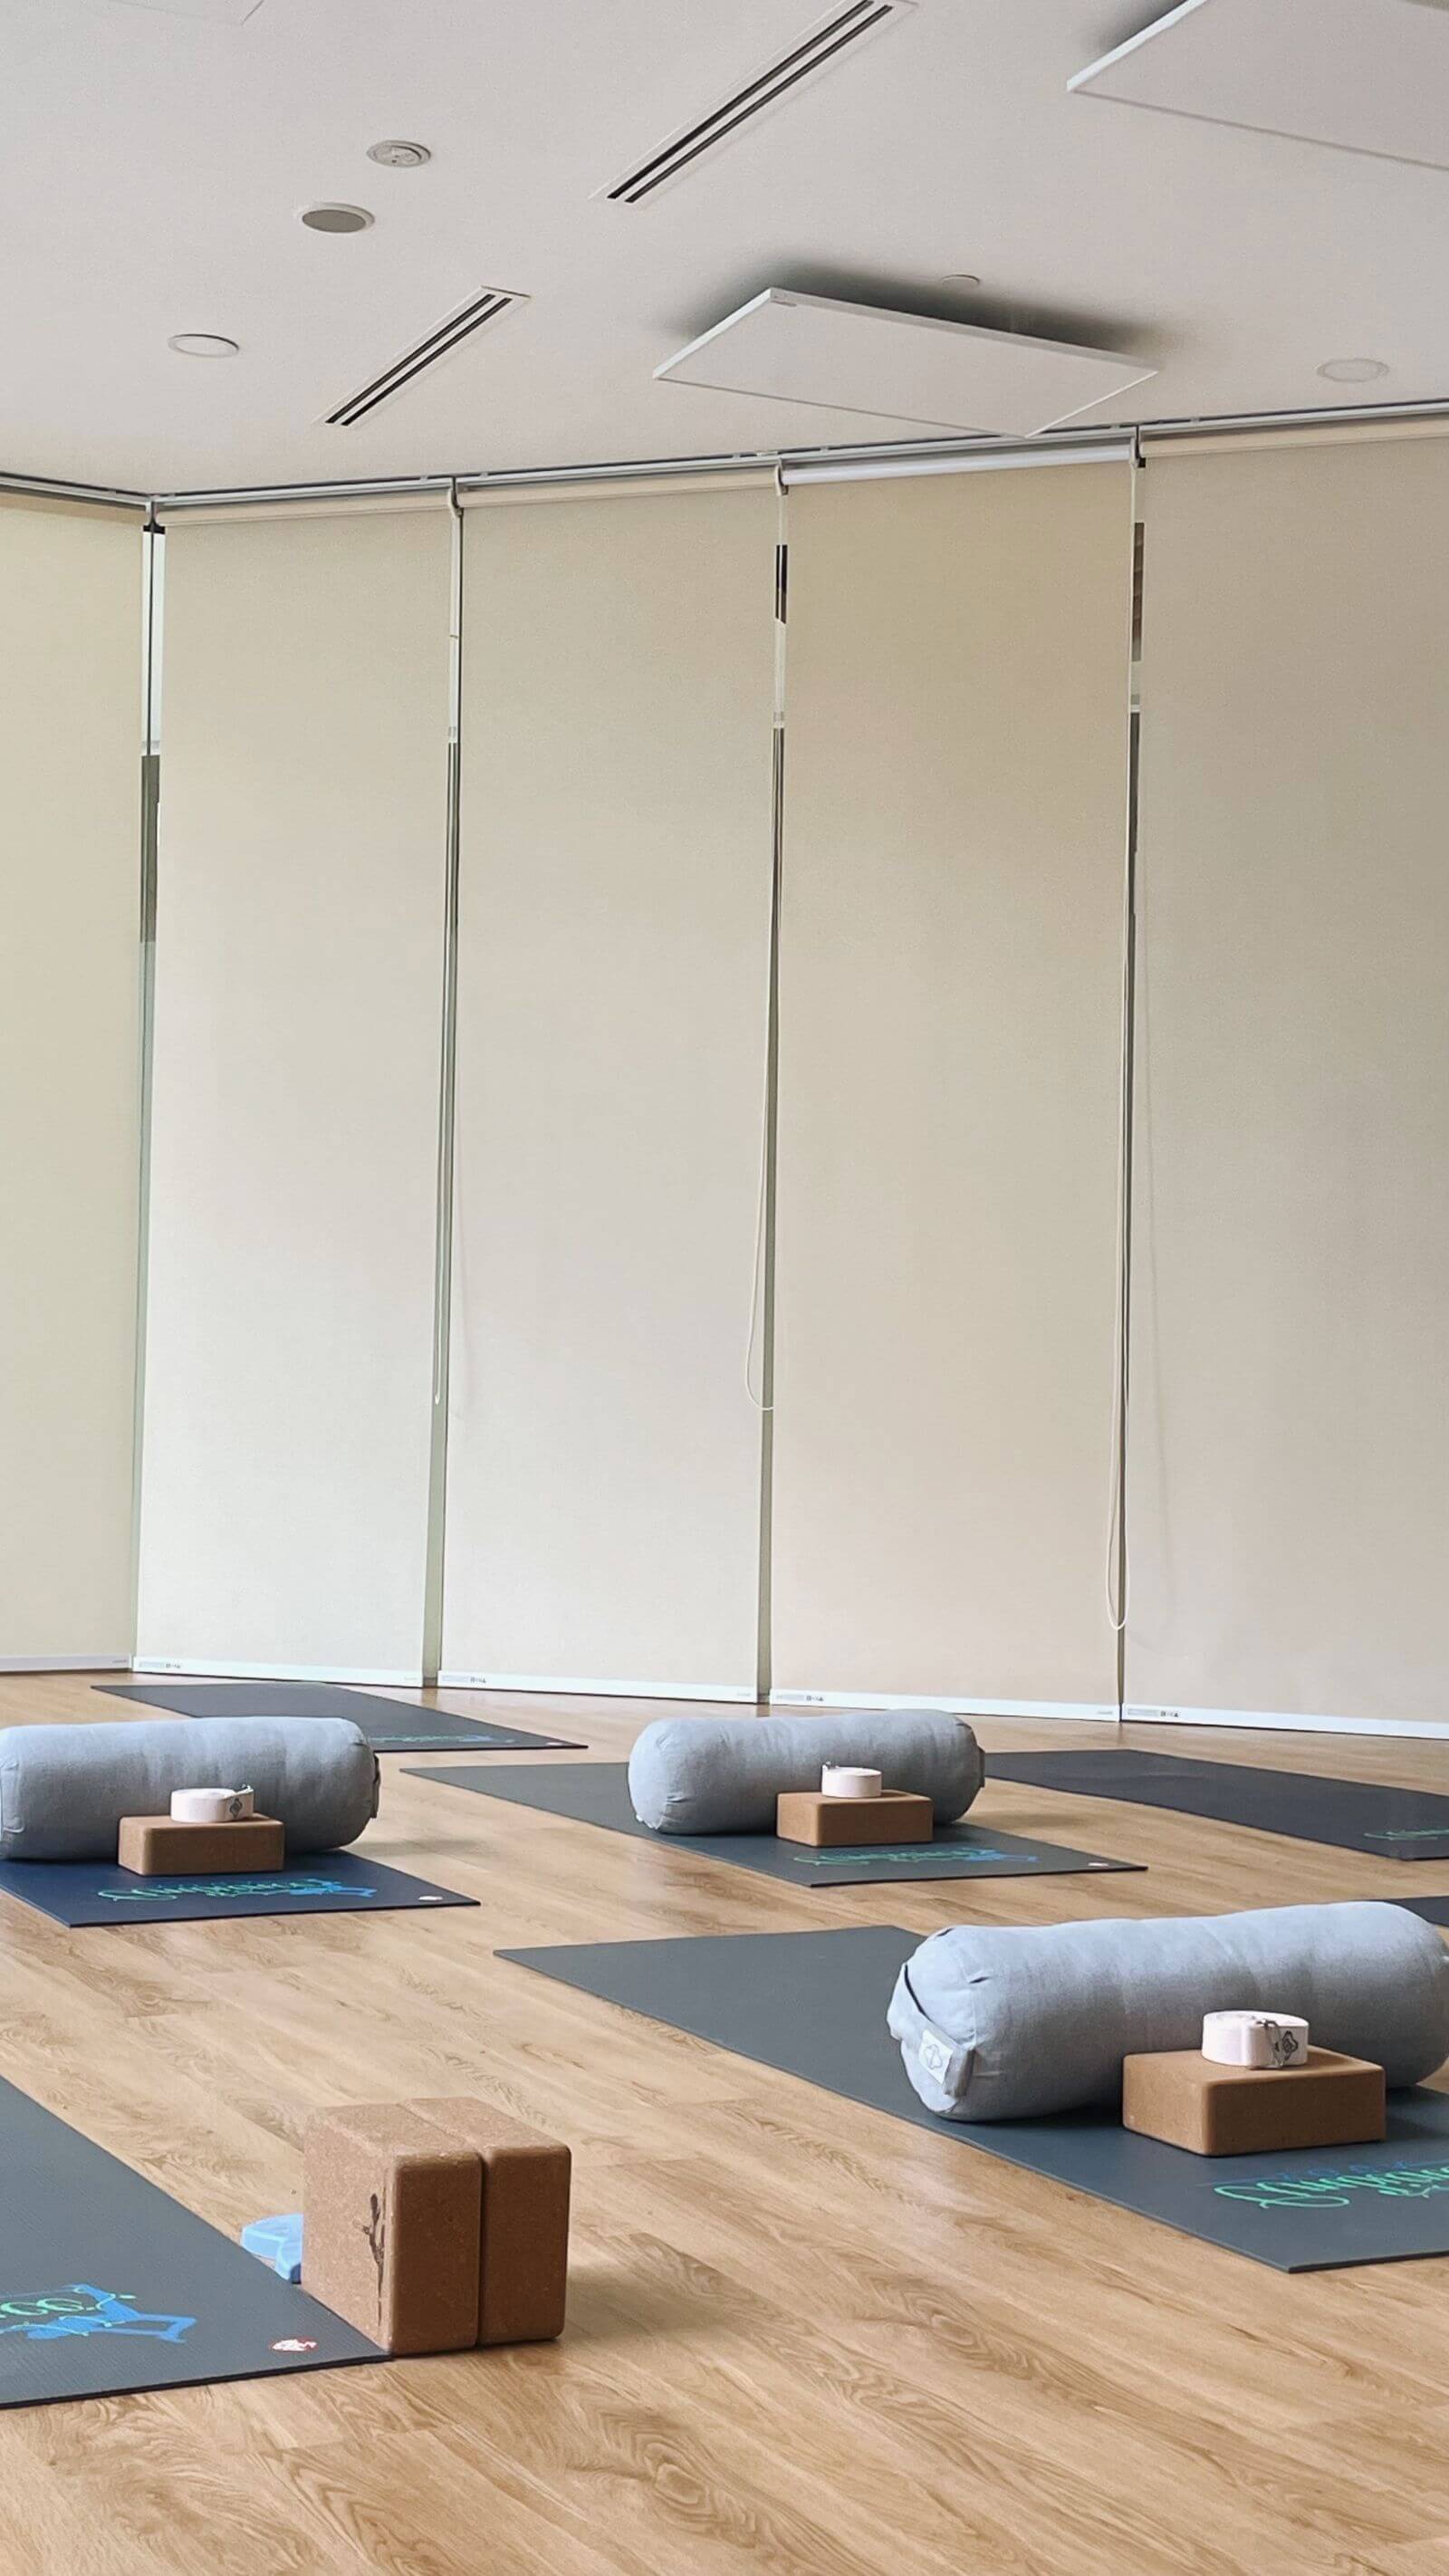 Own Your Own Yoga Studio For As Little As 80K + Rental Deposit (Franchise Option)